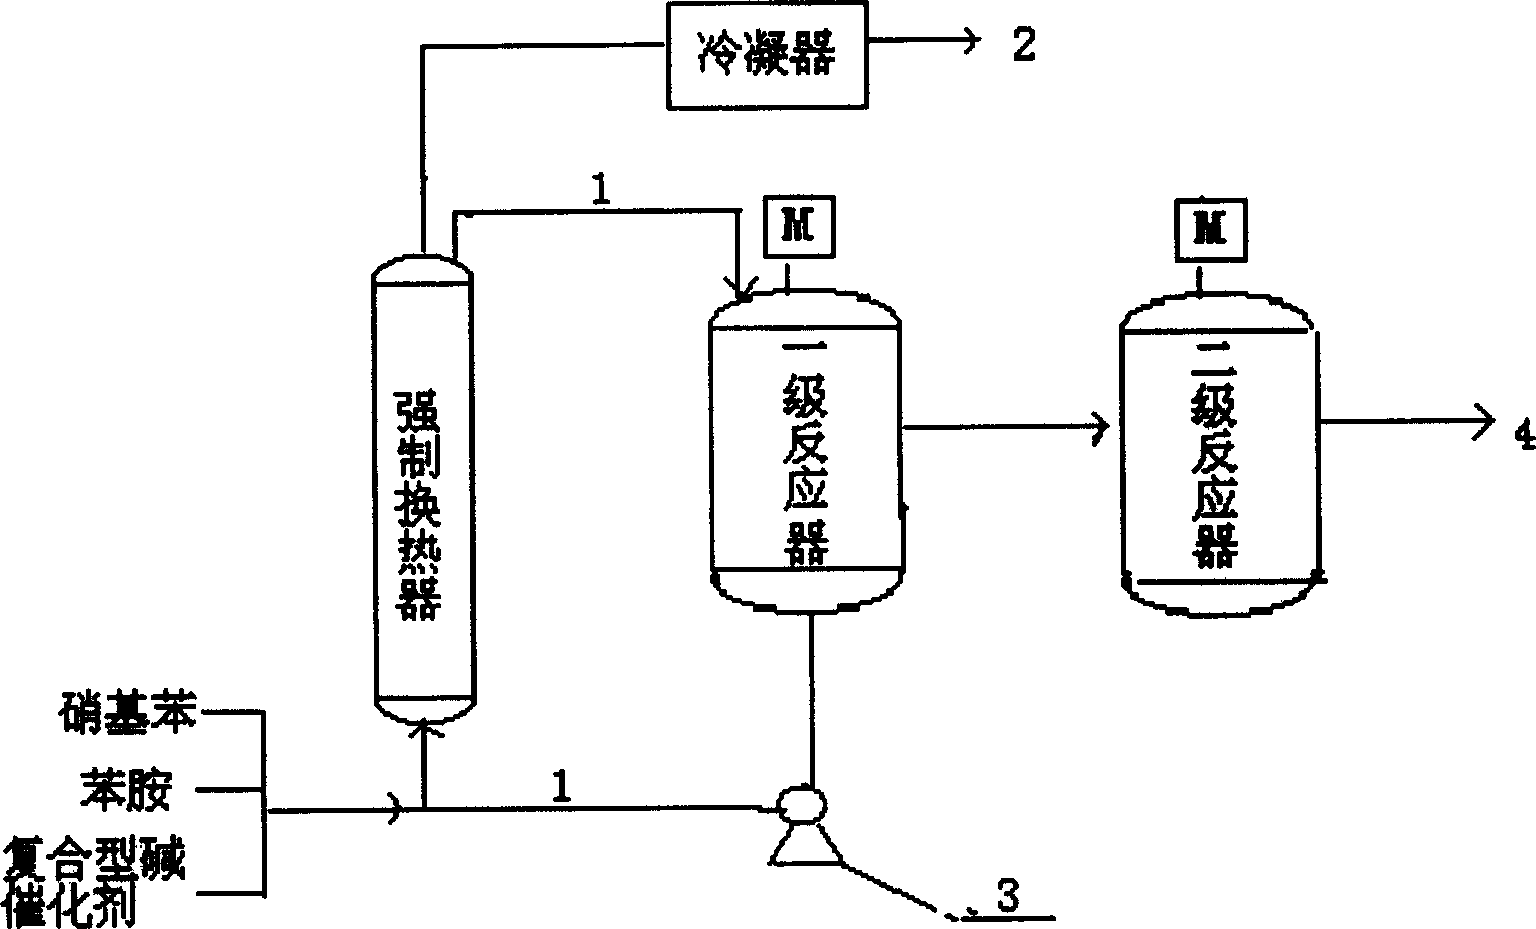 Method for synthesizing 4-nitro diphenylamine and 4-nitroso diphenylamine or/and their salts